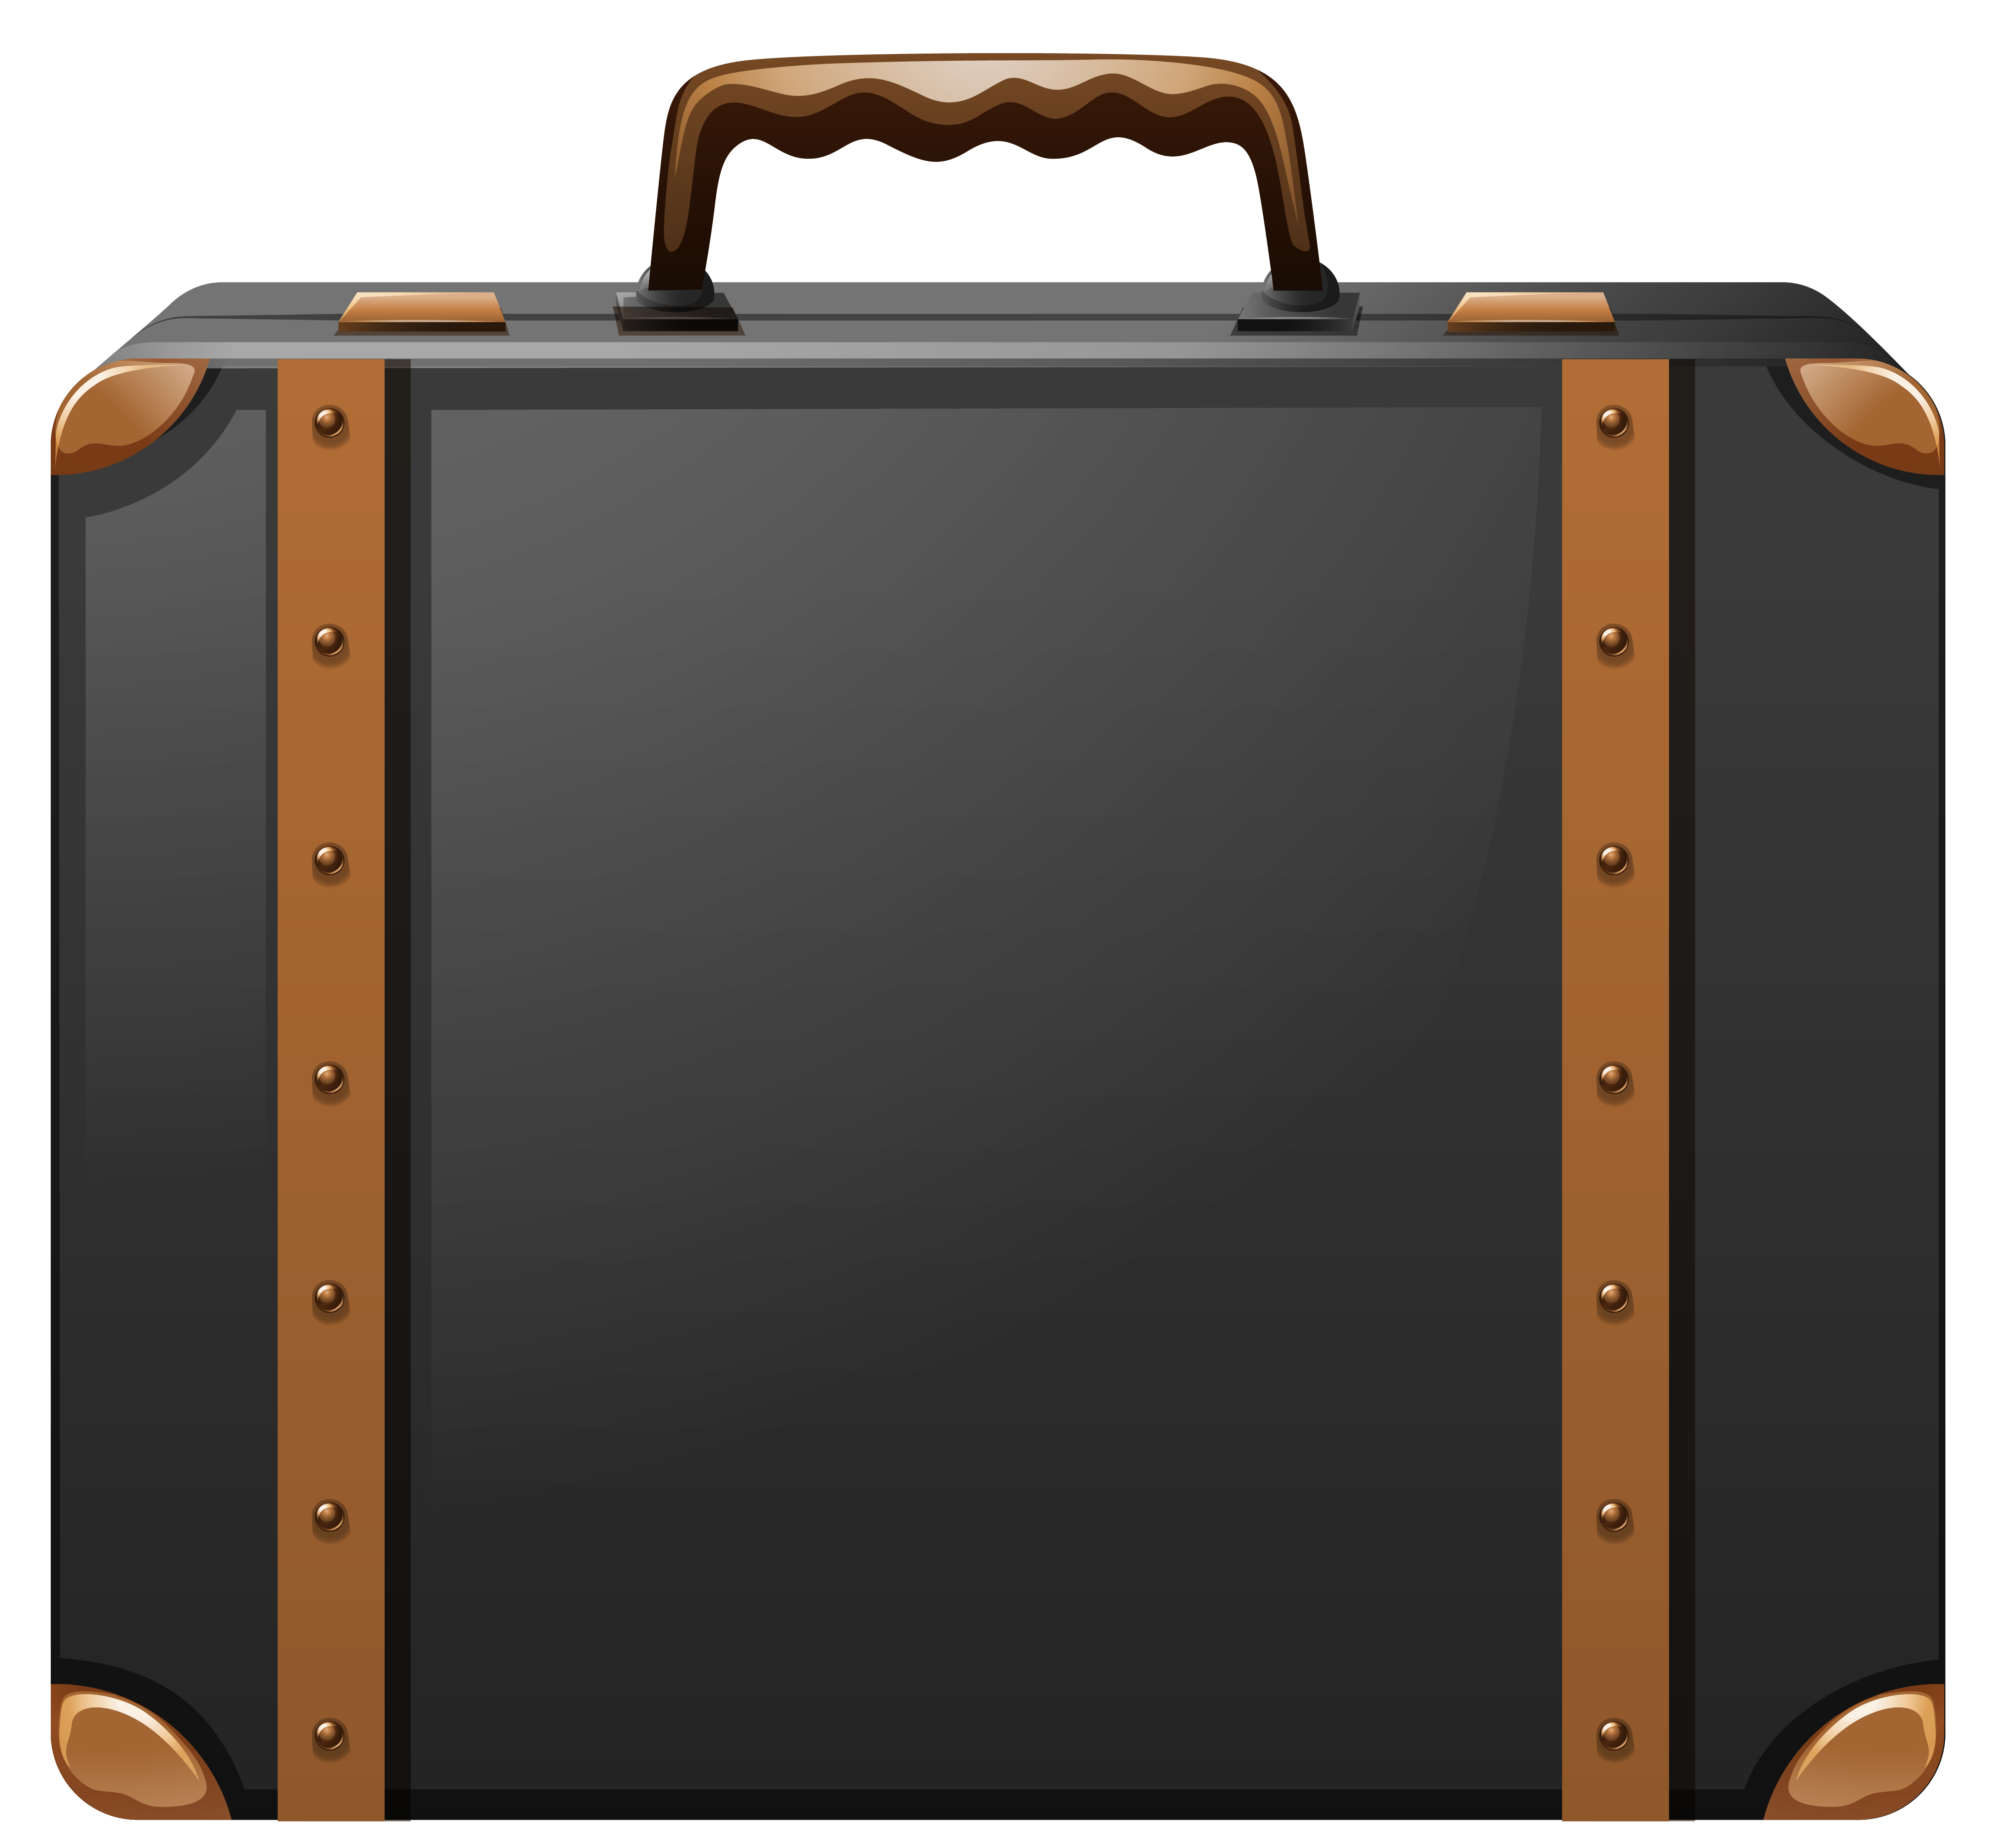 Bavul